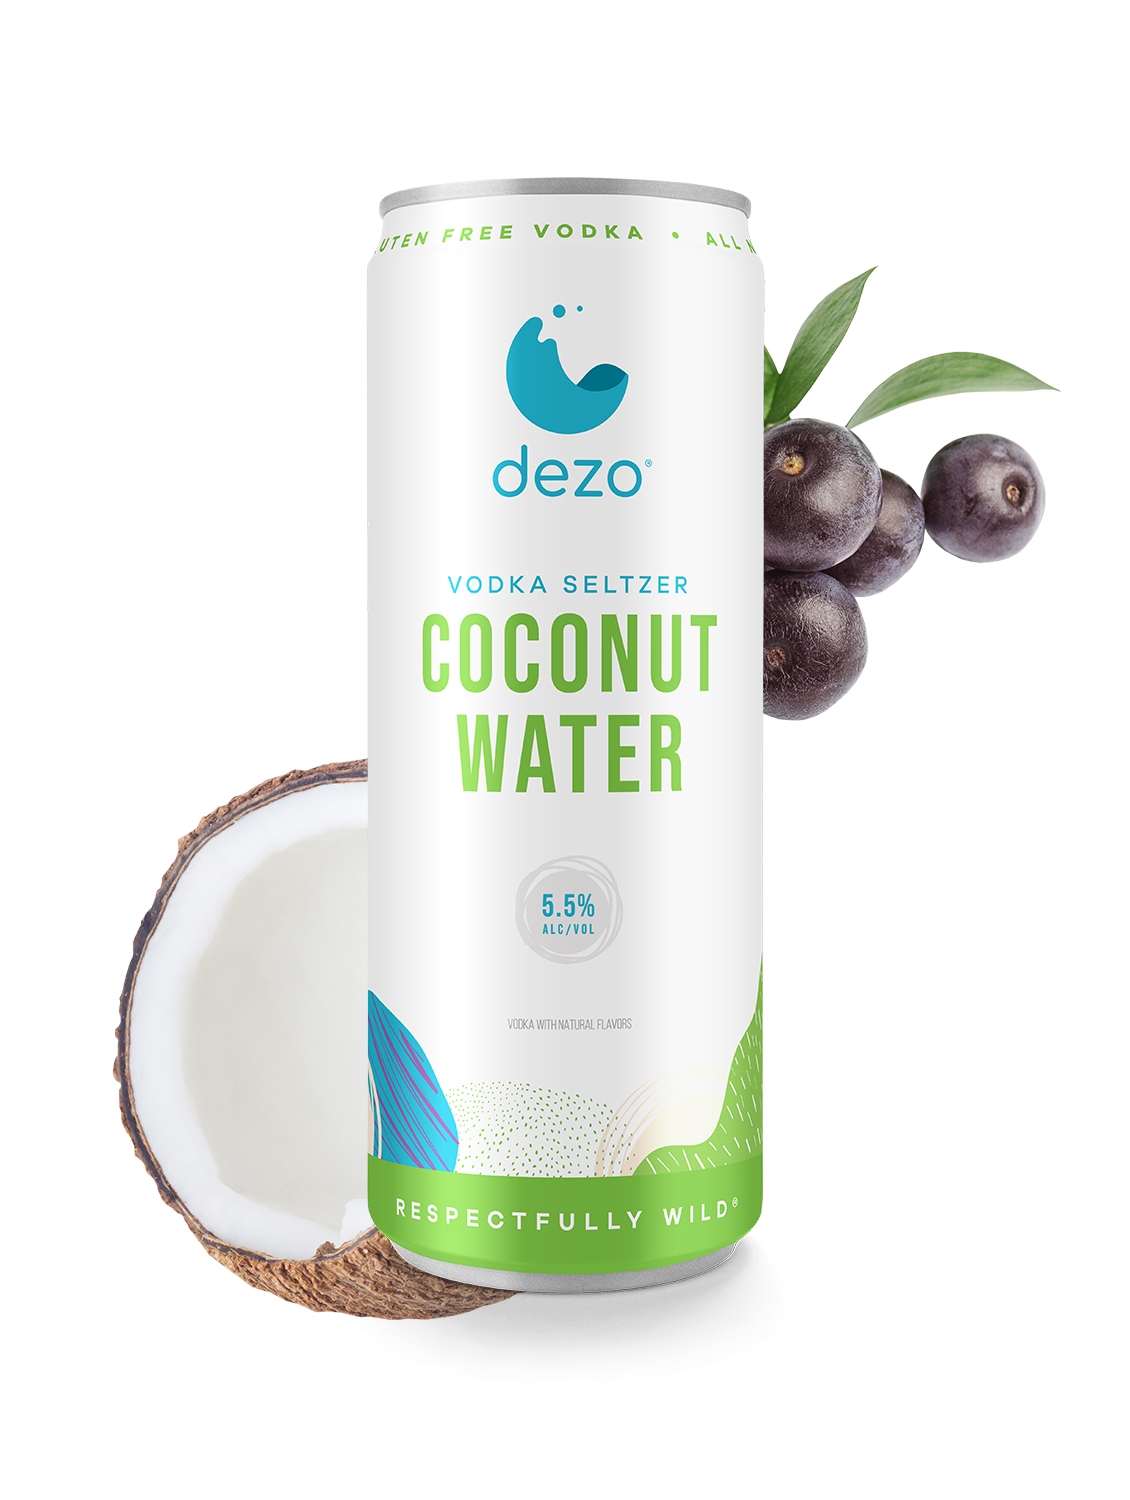 Dezo Spiked Coconut Water